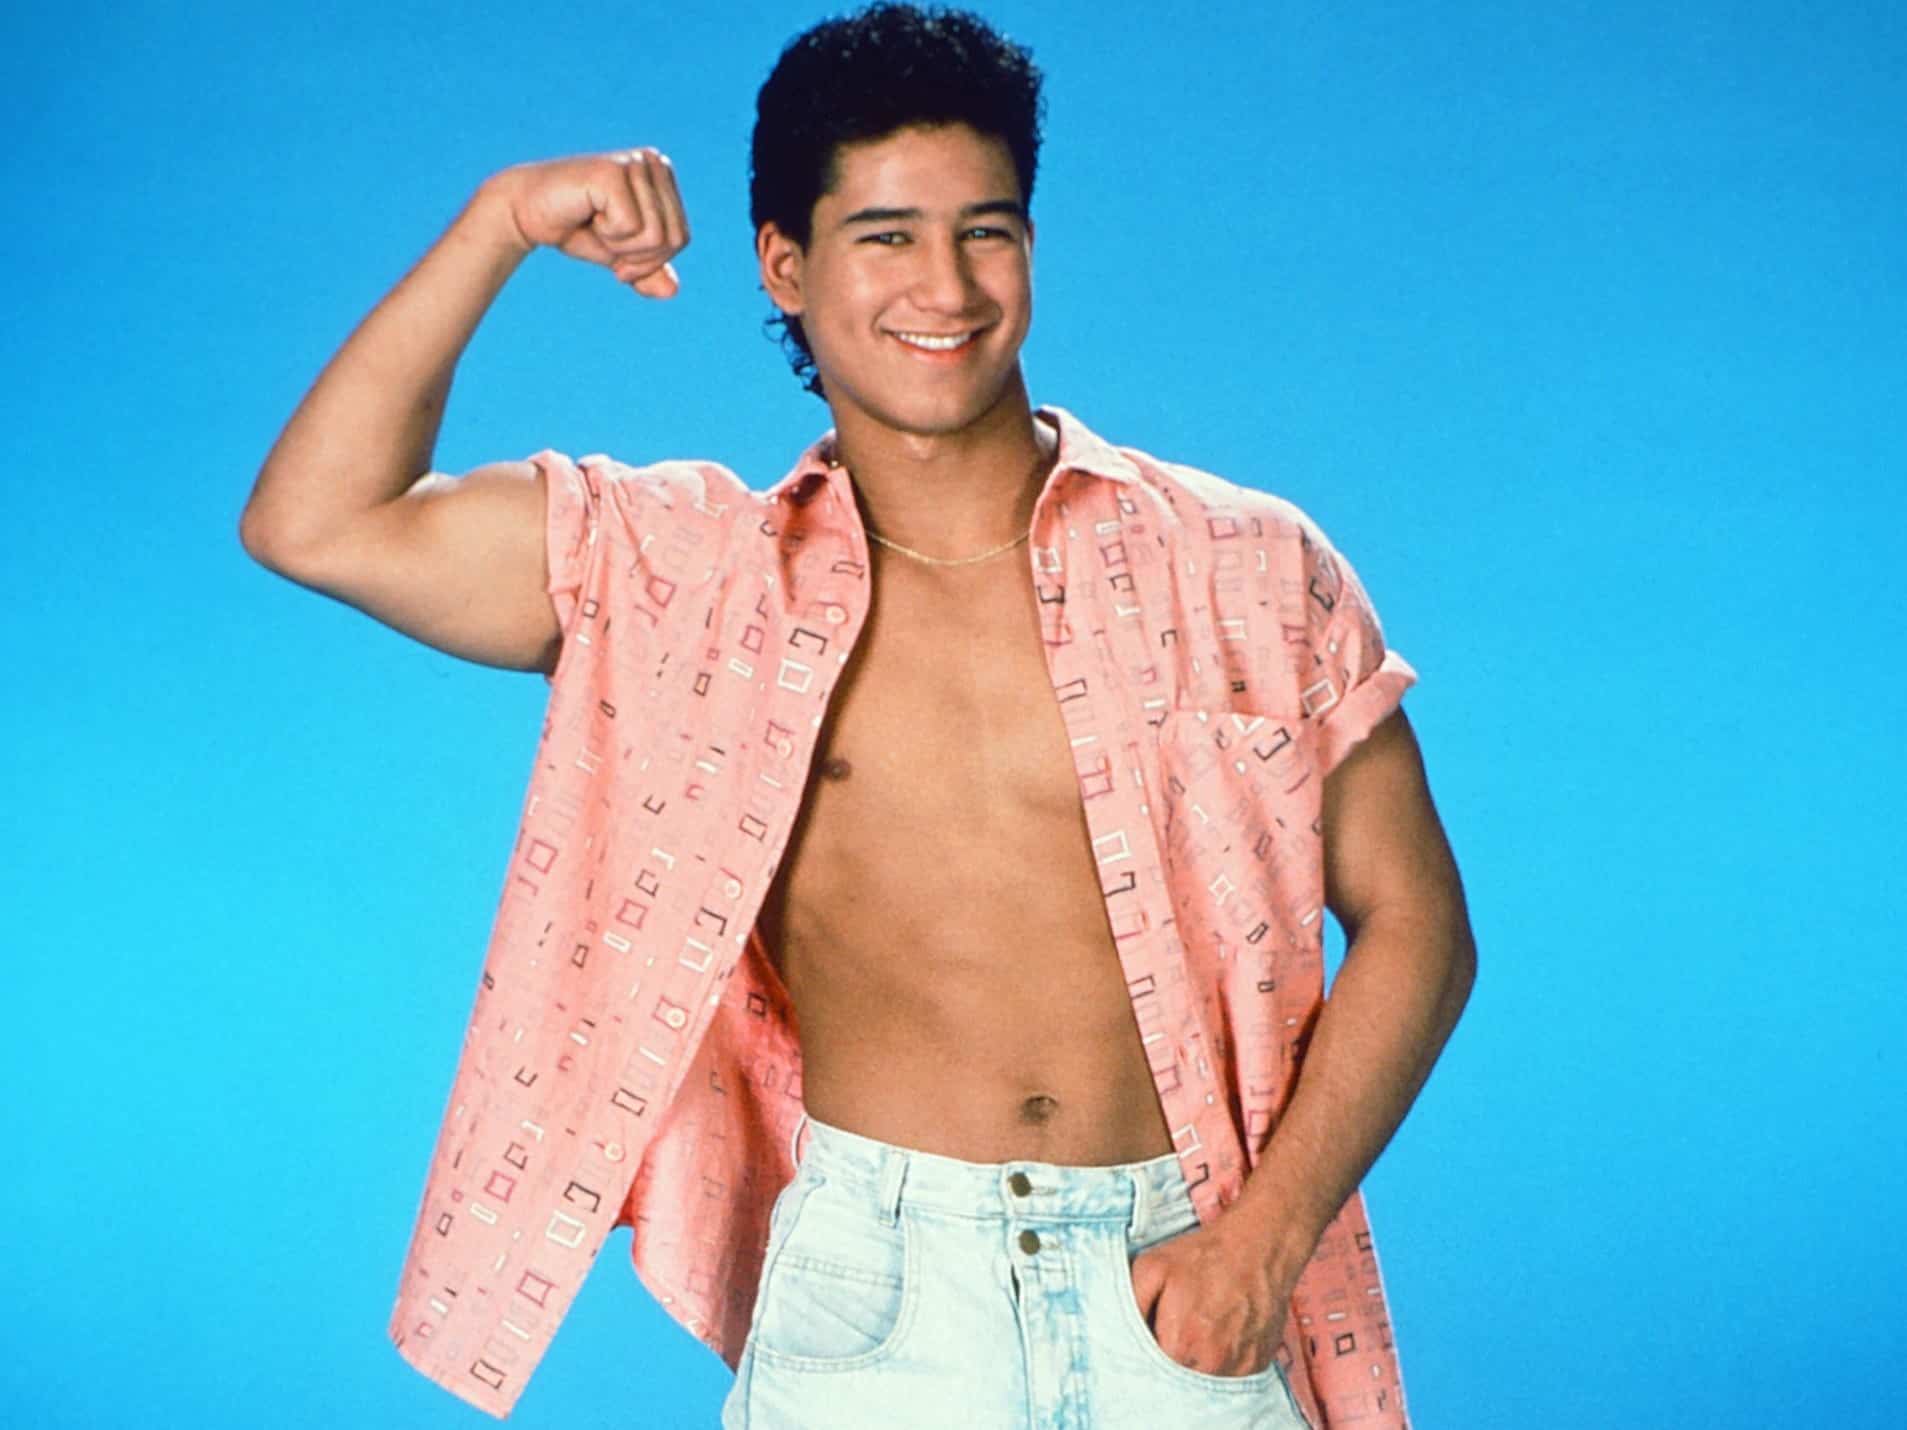 Mario Lopez was born in Chula Vista, California, on October 10, 1973